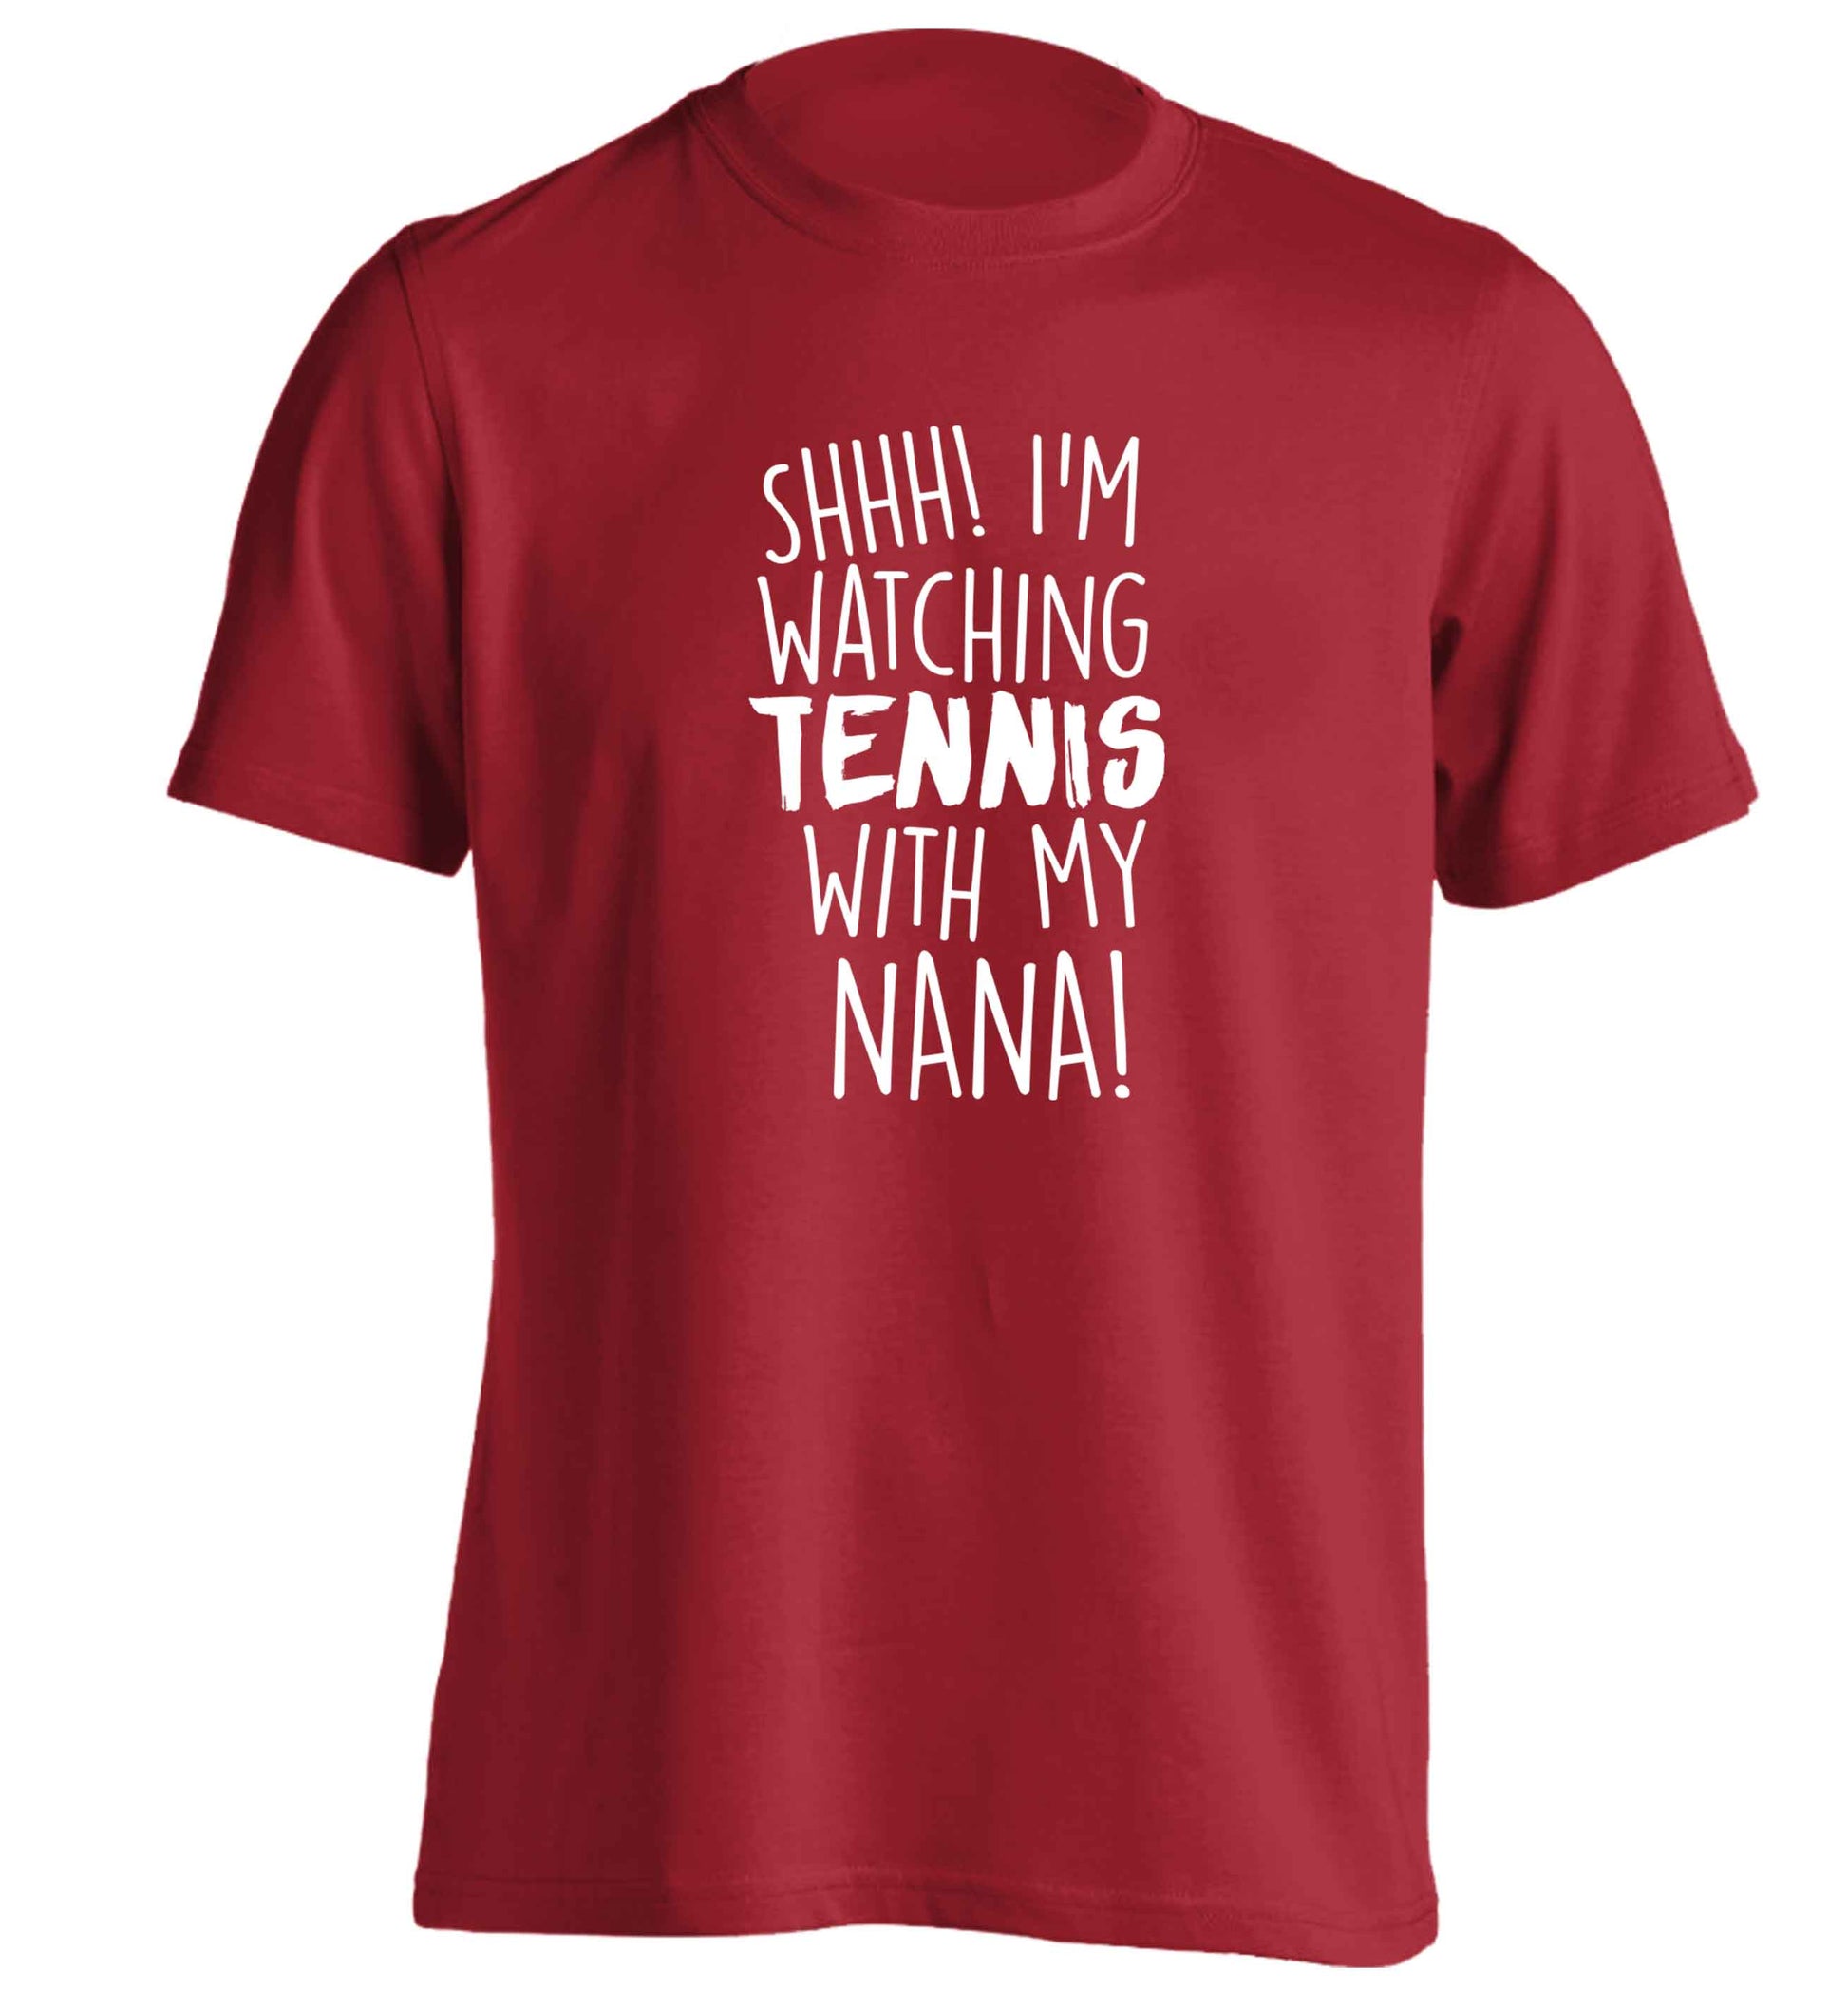 Shh! I'm watching tennis with my nana! adults unisex red Tshirt 2XL